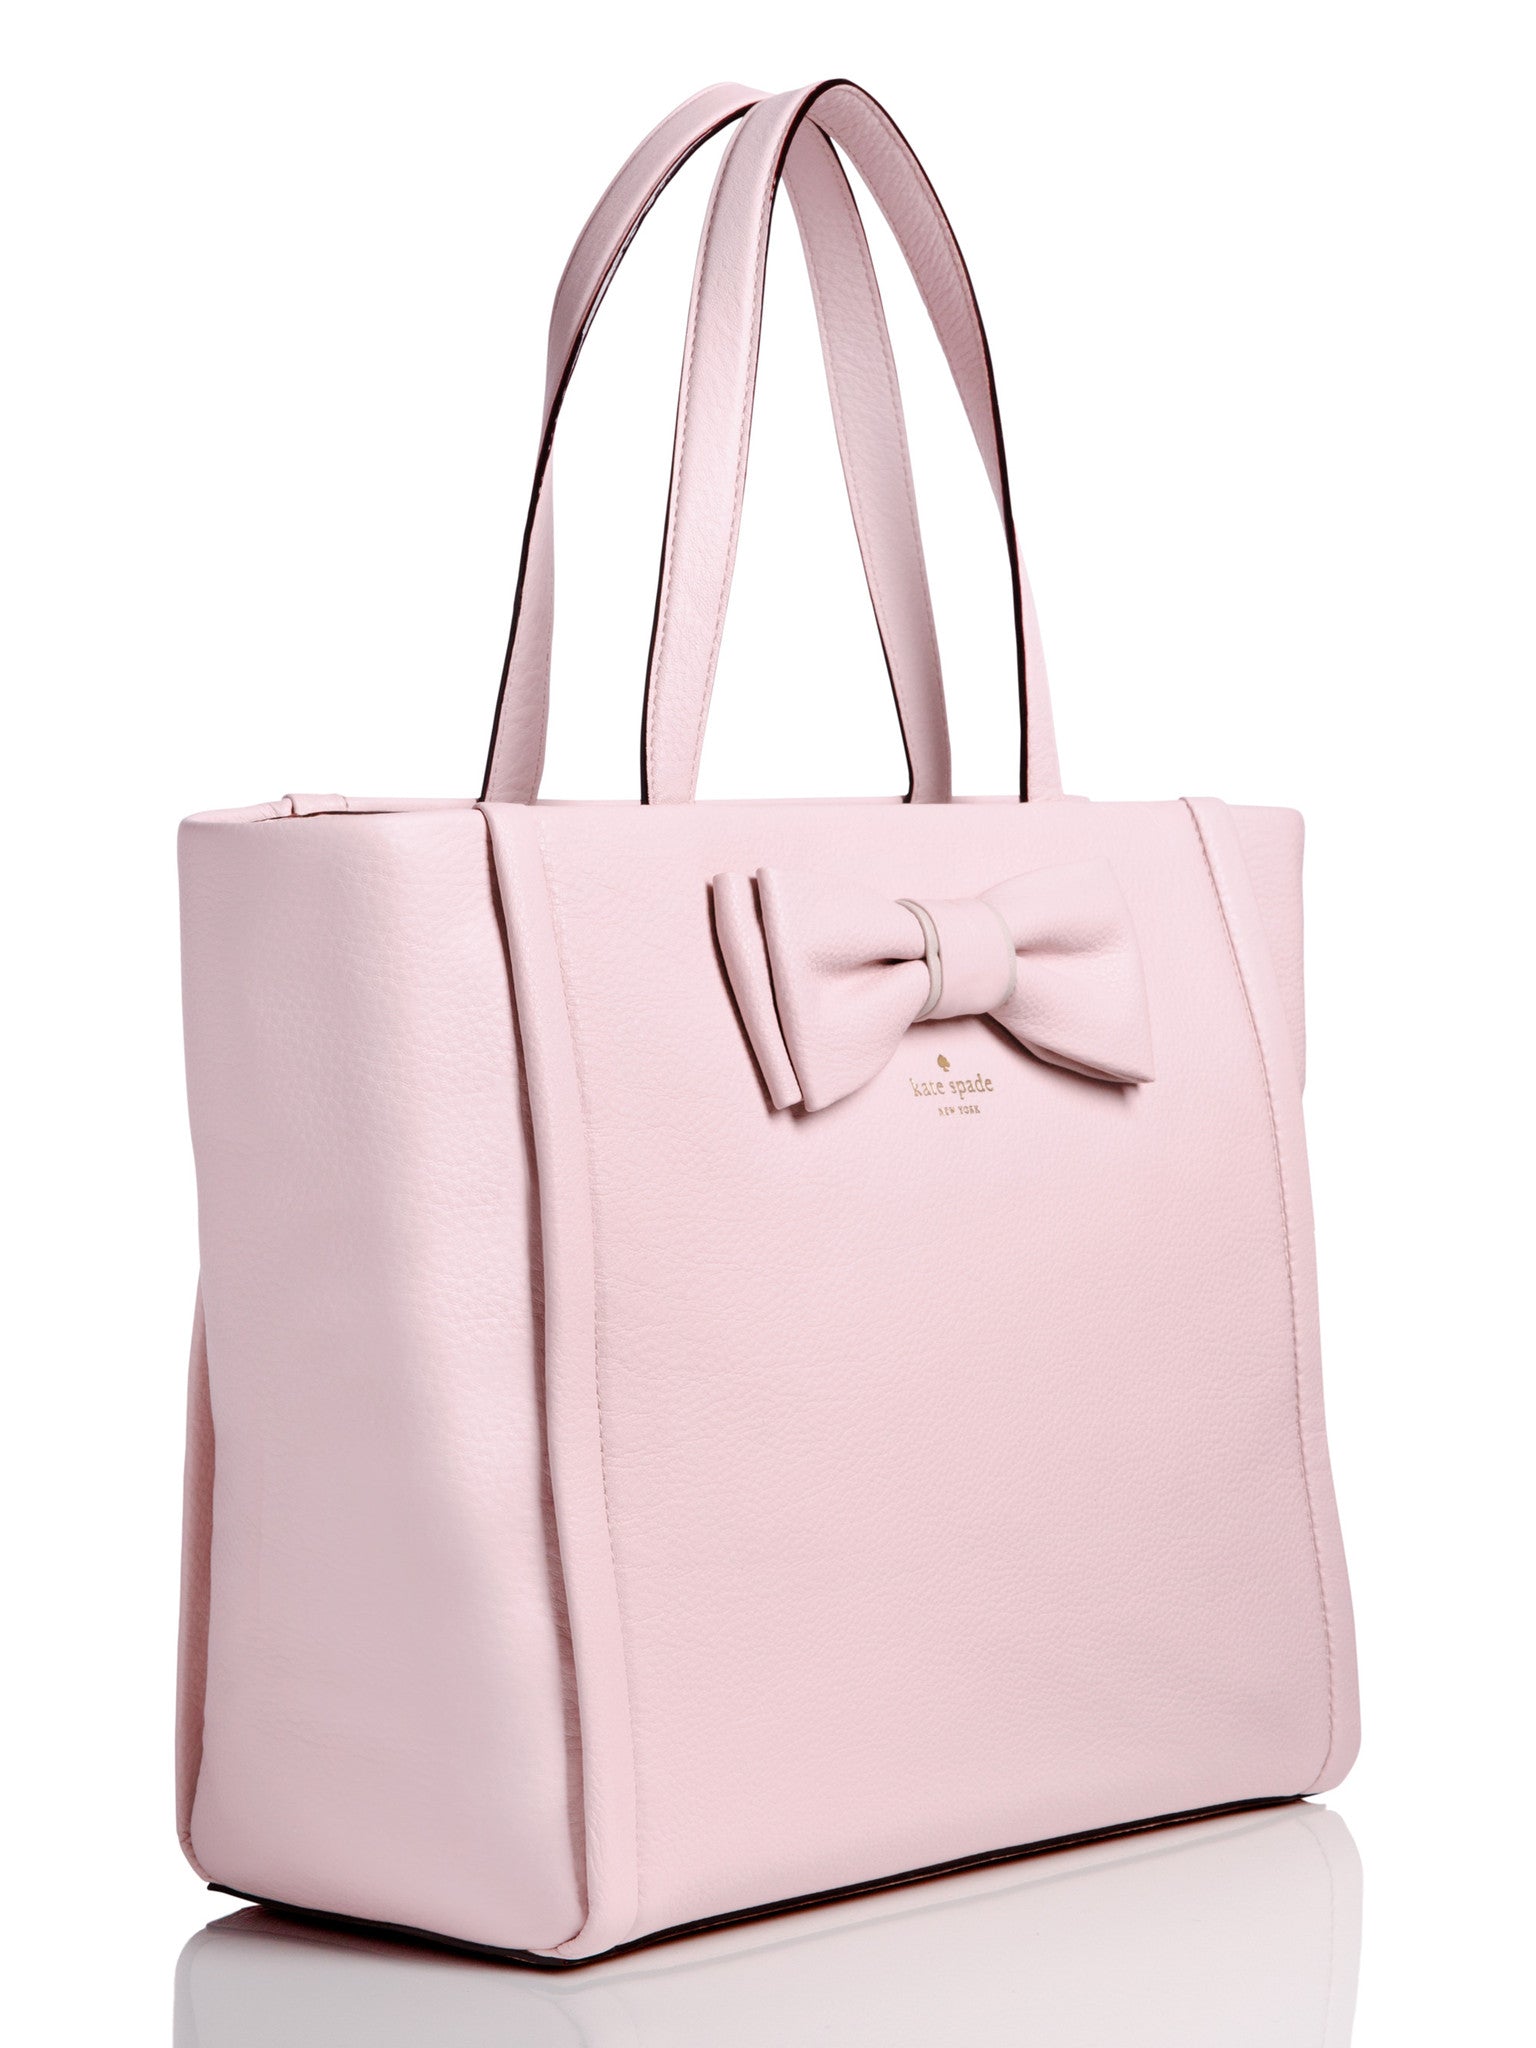 kate spade, Bags, Pink Kate Spade Tote Bag